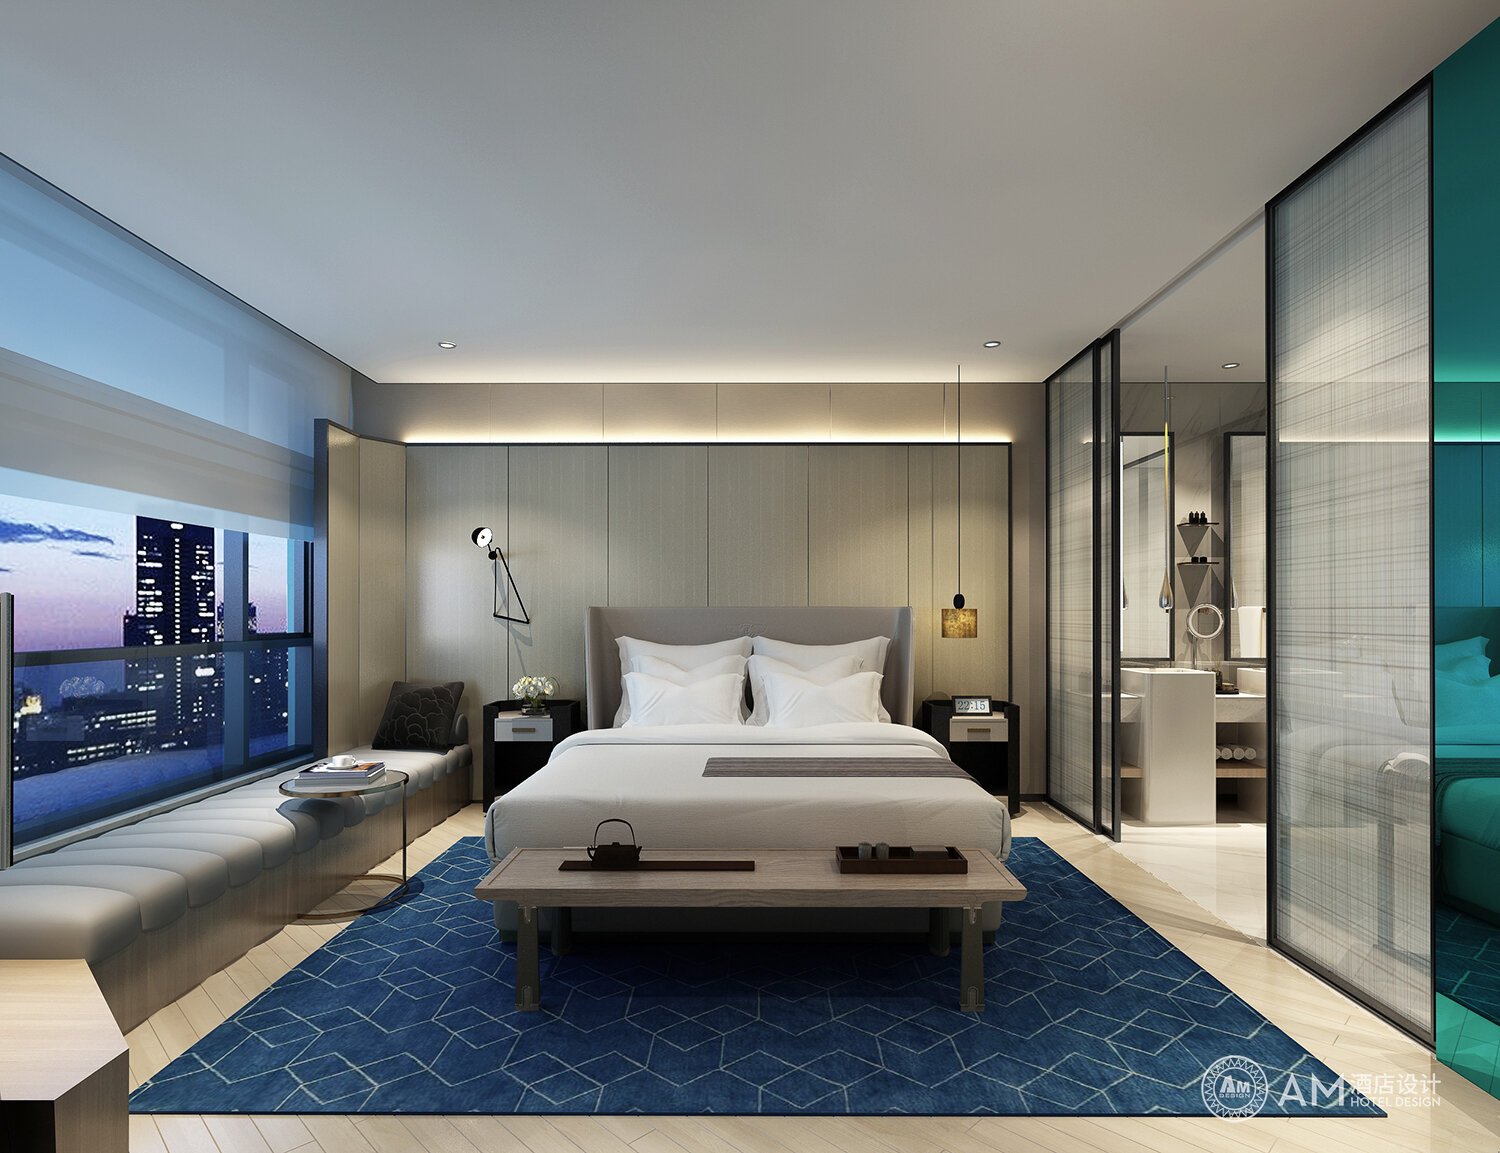 AM DESIGN | Room design of Xi'an Jinpan Hotel